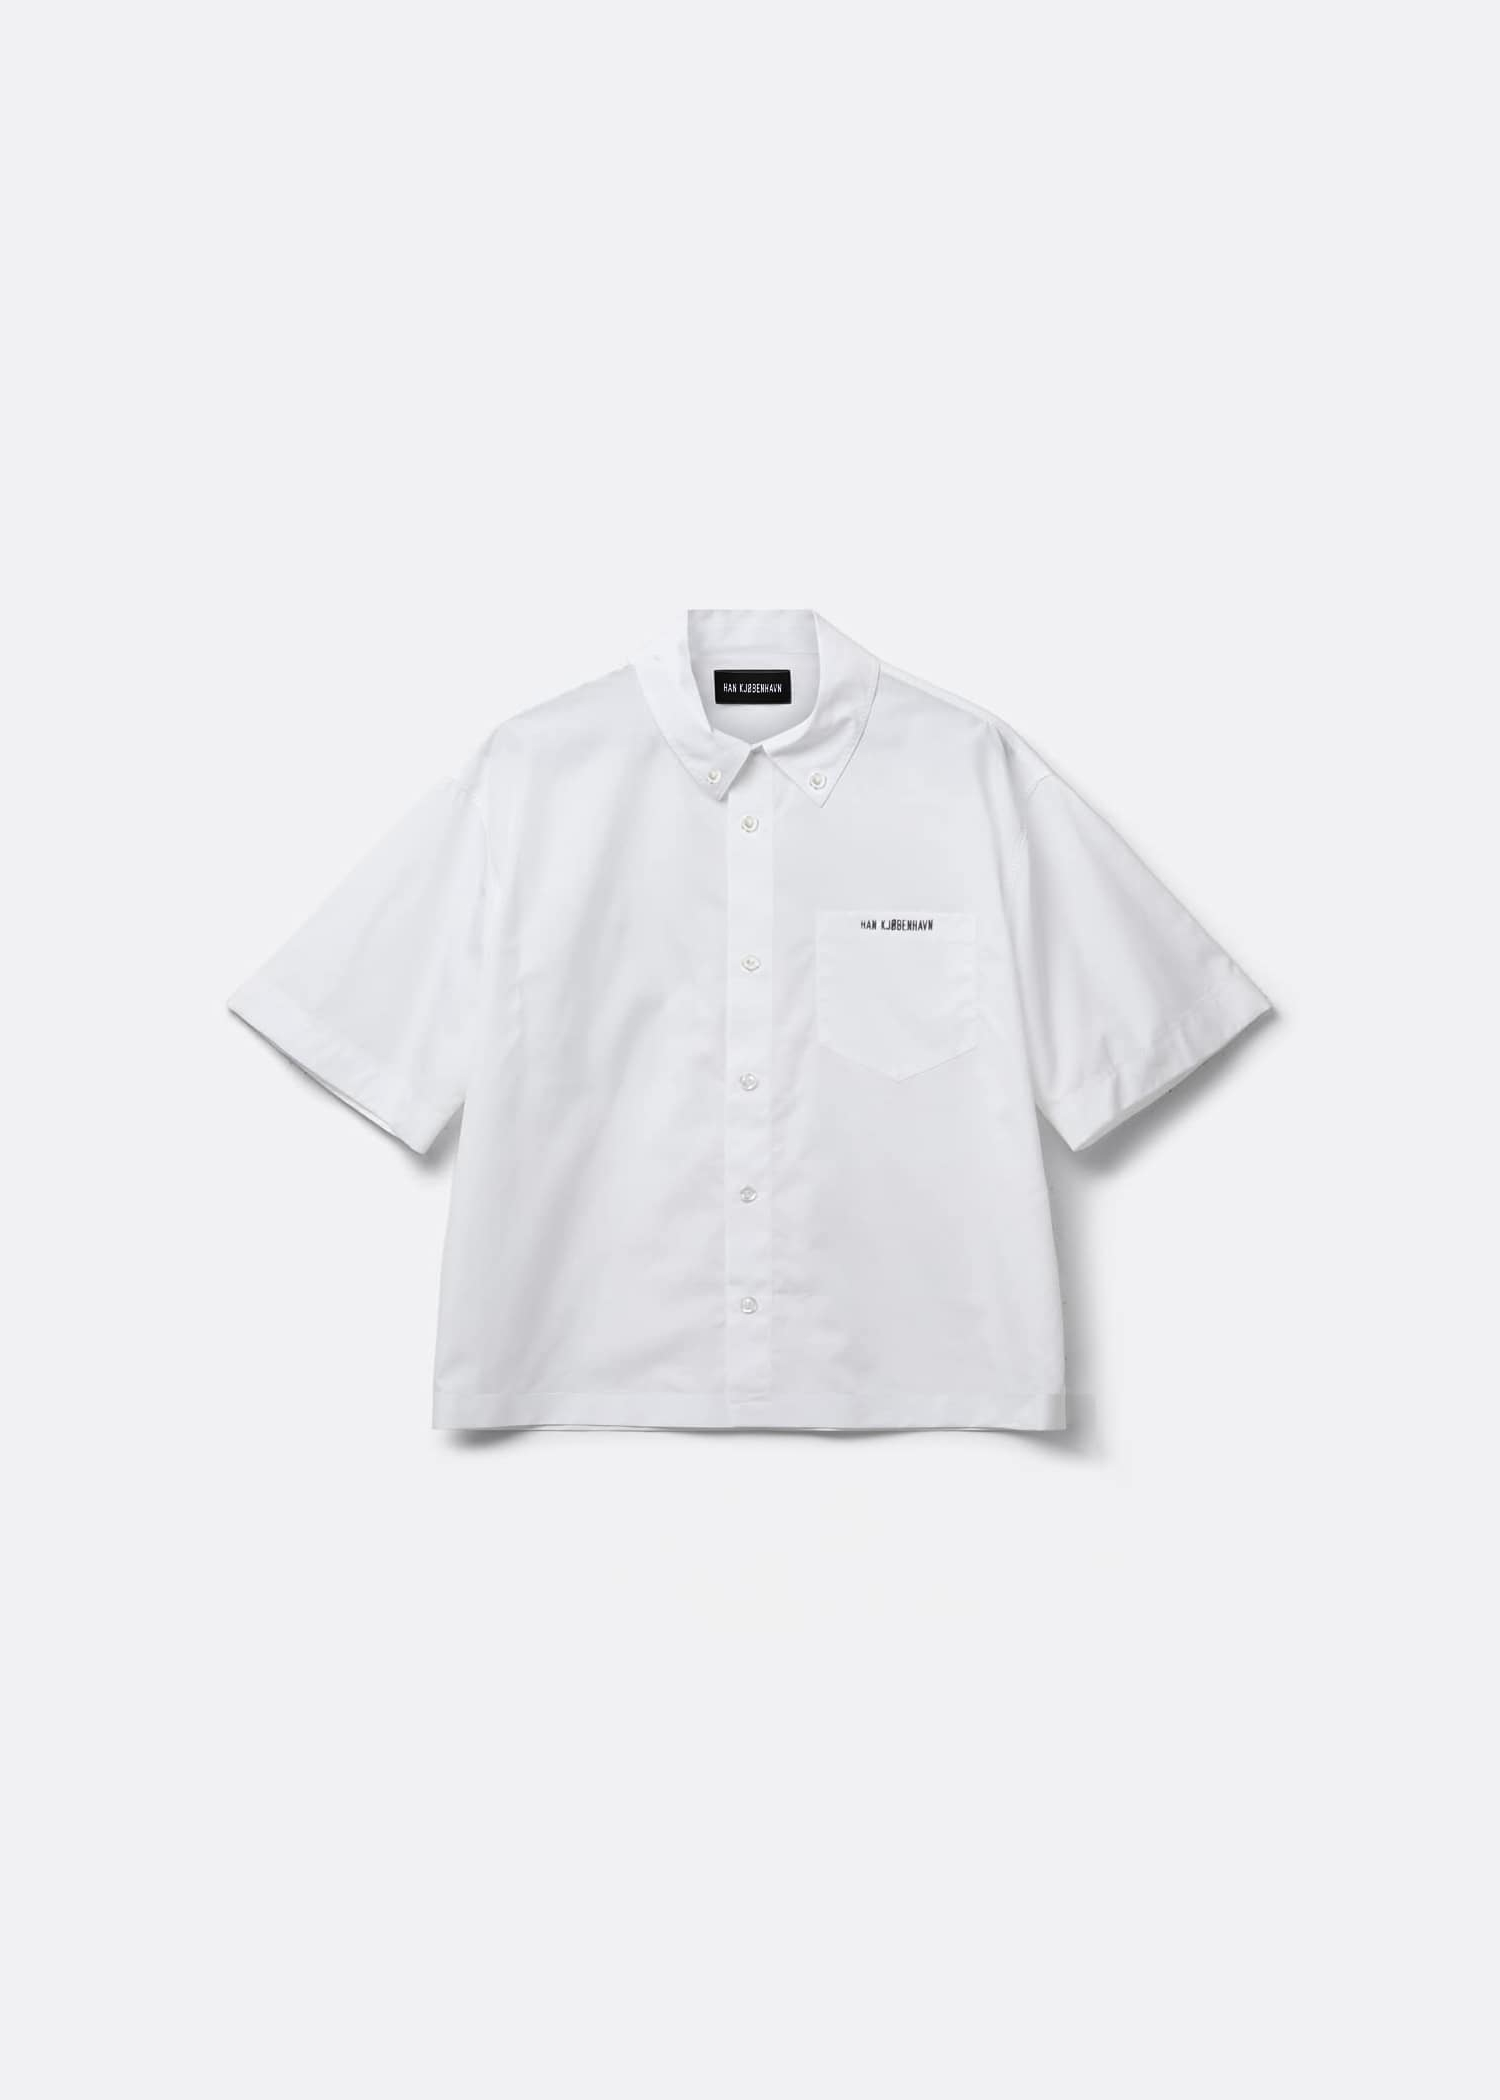 HAN Kjøbenhavn Cotton Fitted Shirt